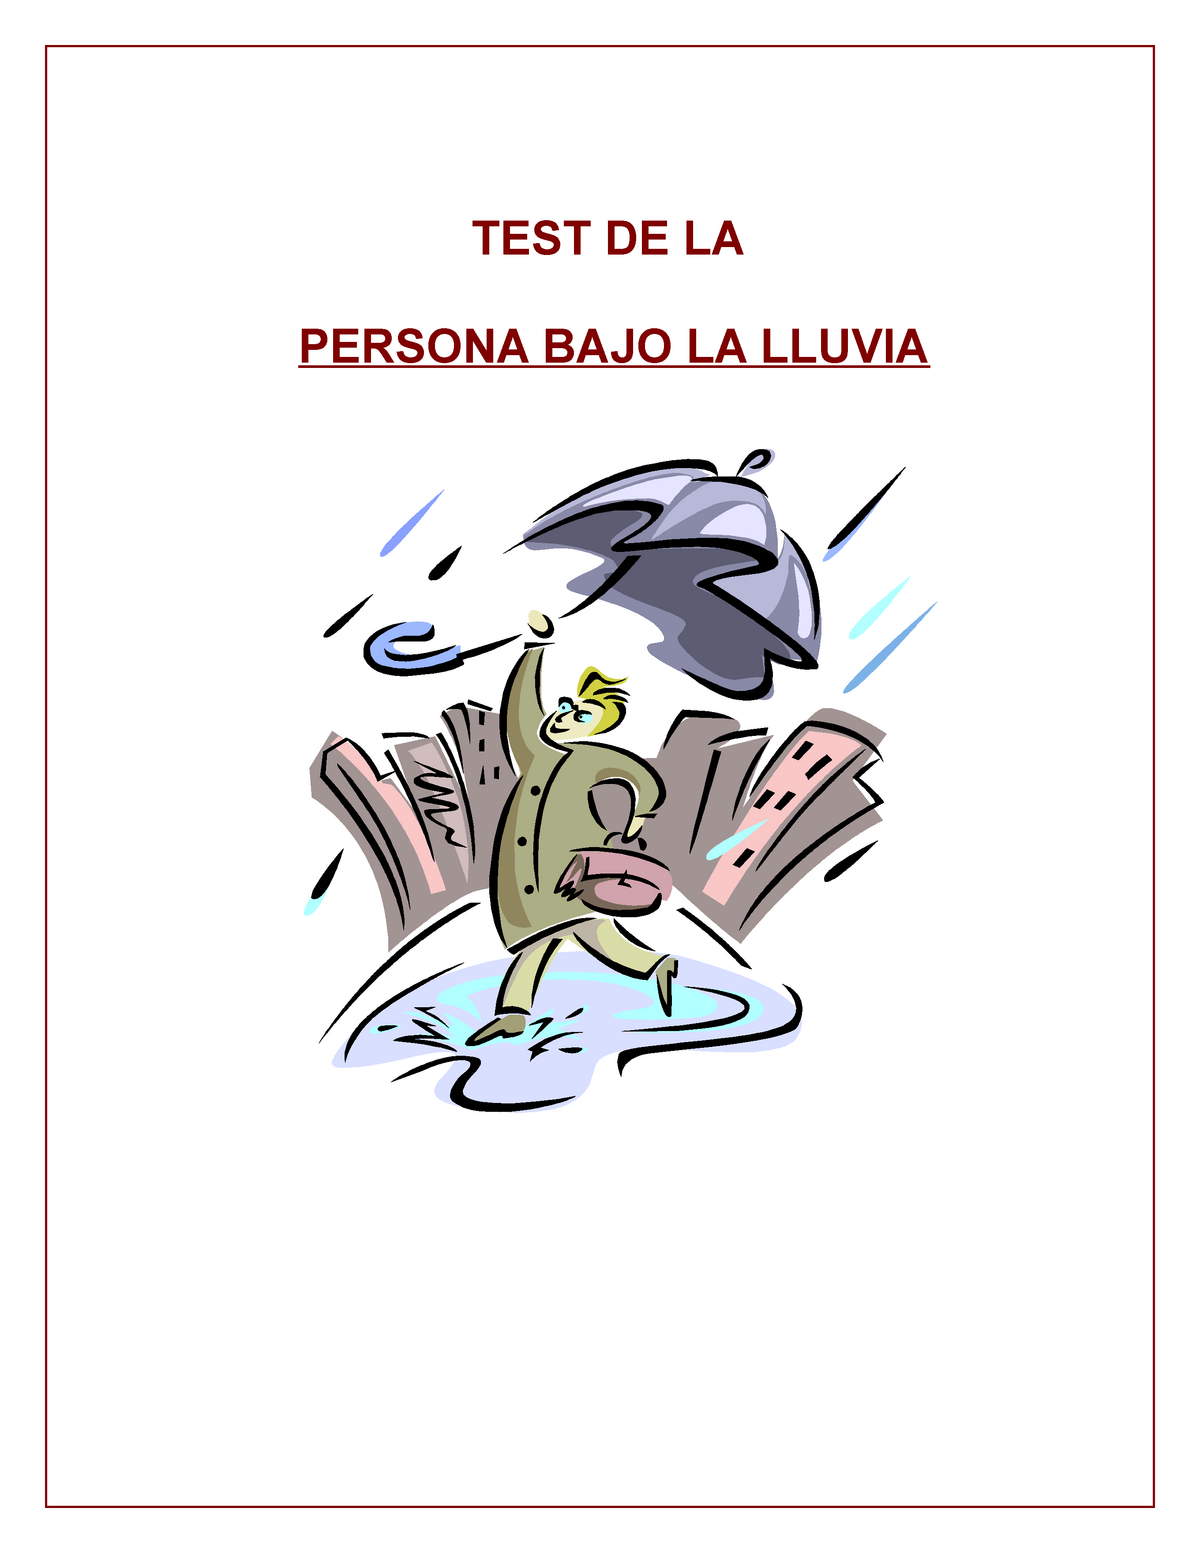 test de persona bajo la lluvia - TEST DE LA PERSONA BAJO LA LLUVIA  APLICACIONES DEL TEST DE LA - Studocu